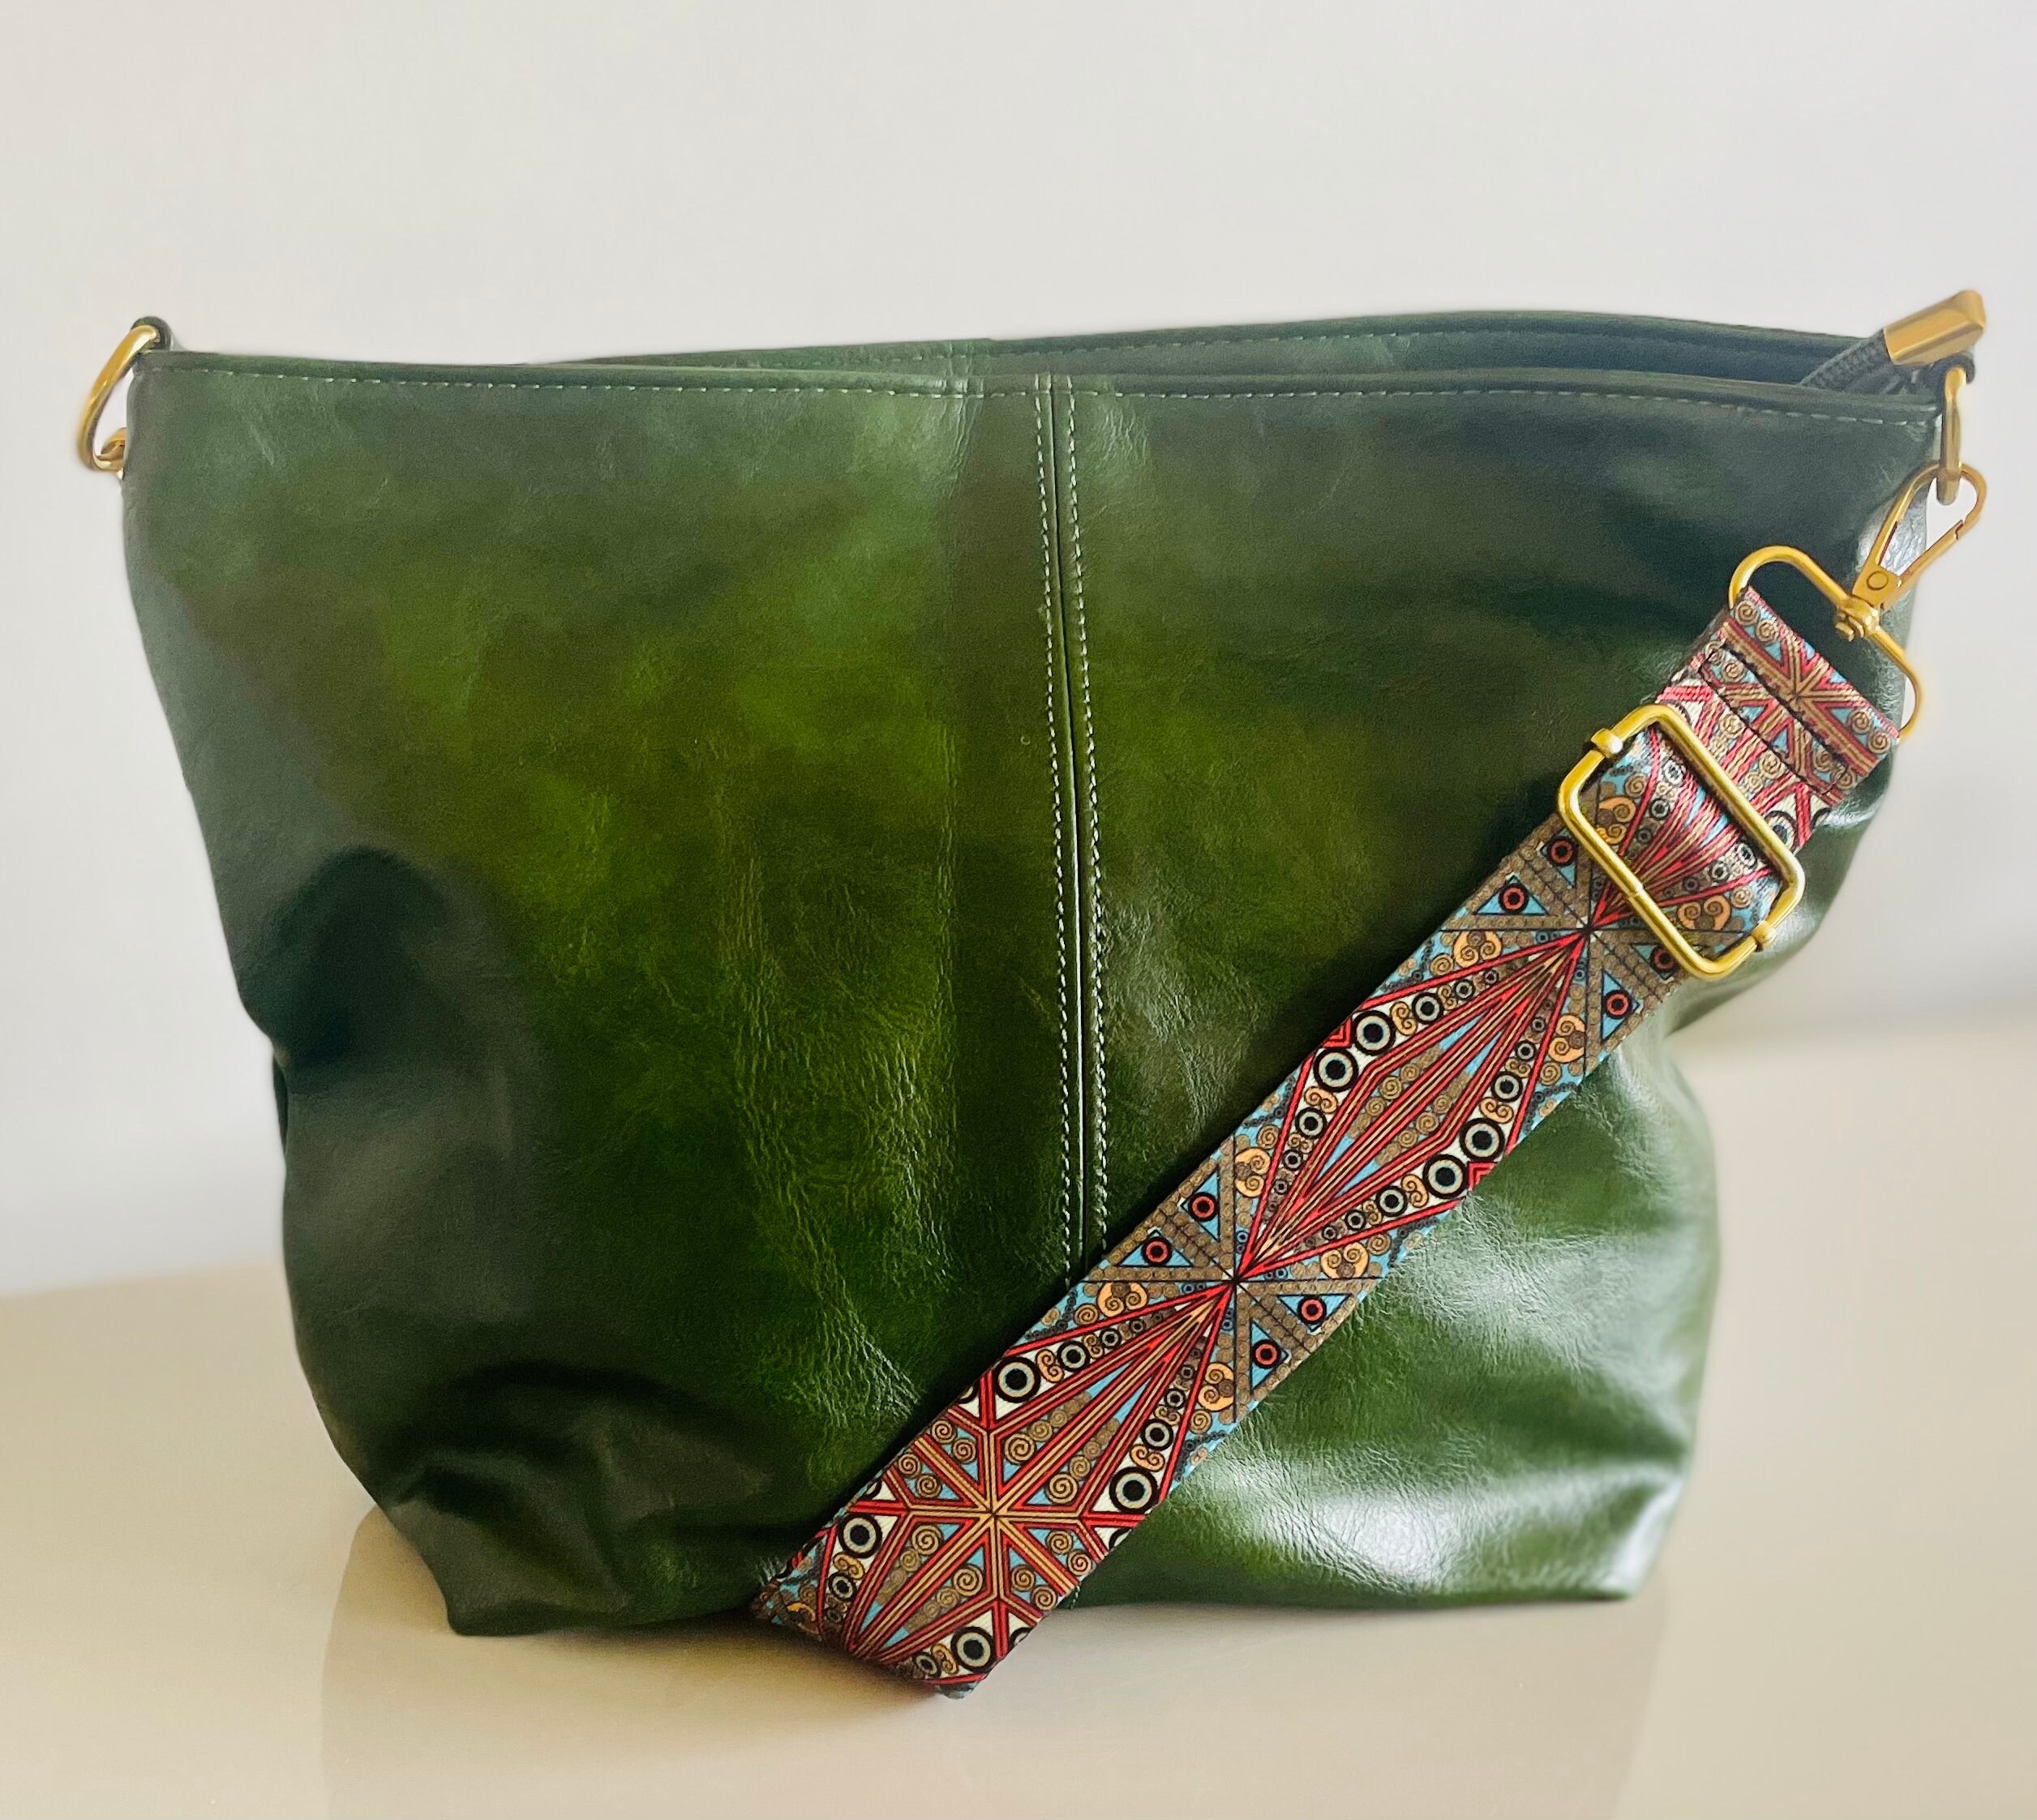 Town Bucket Vegan Leather Bag for Women Hobo Retro Faux Casual Purse Classic Vintage Simple Shoulder Handbag